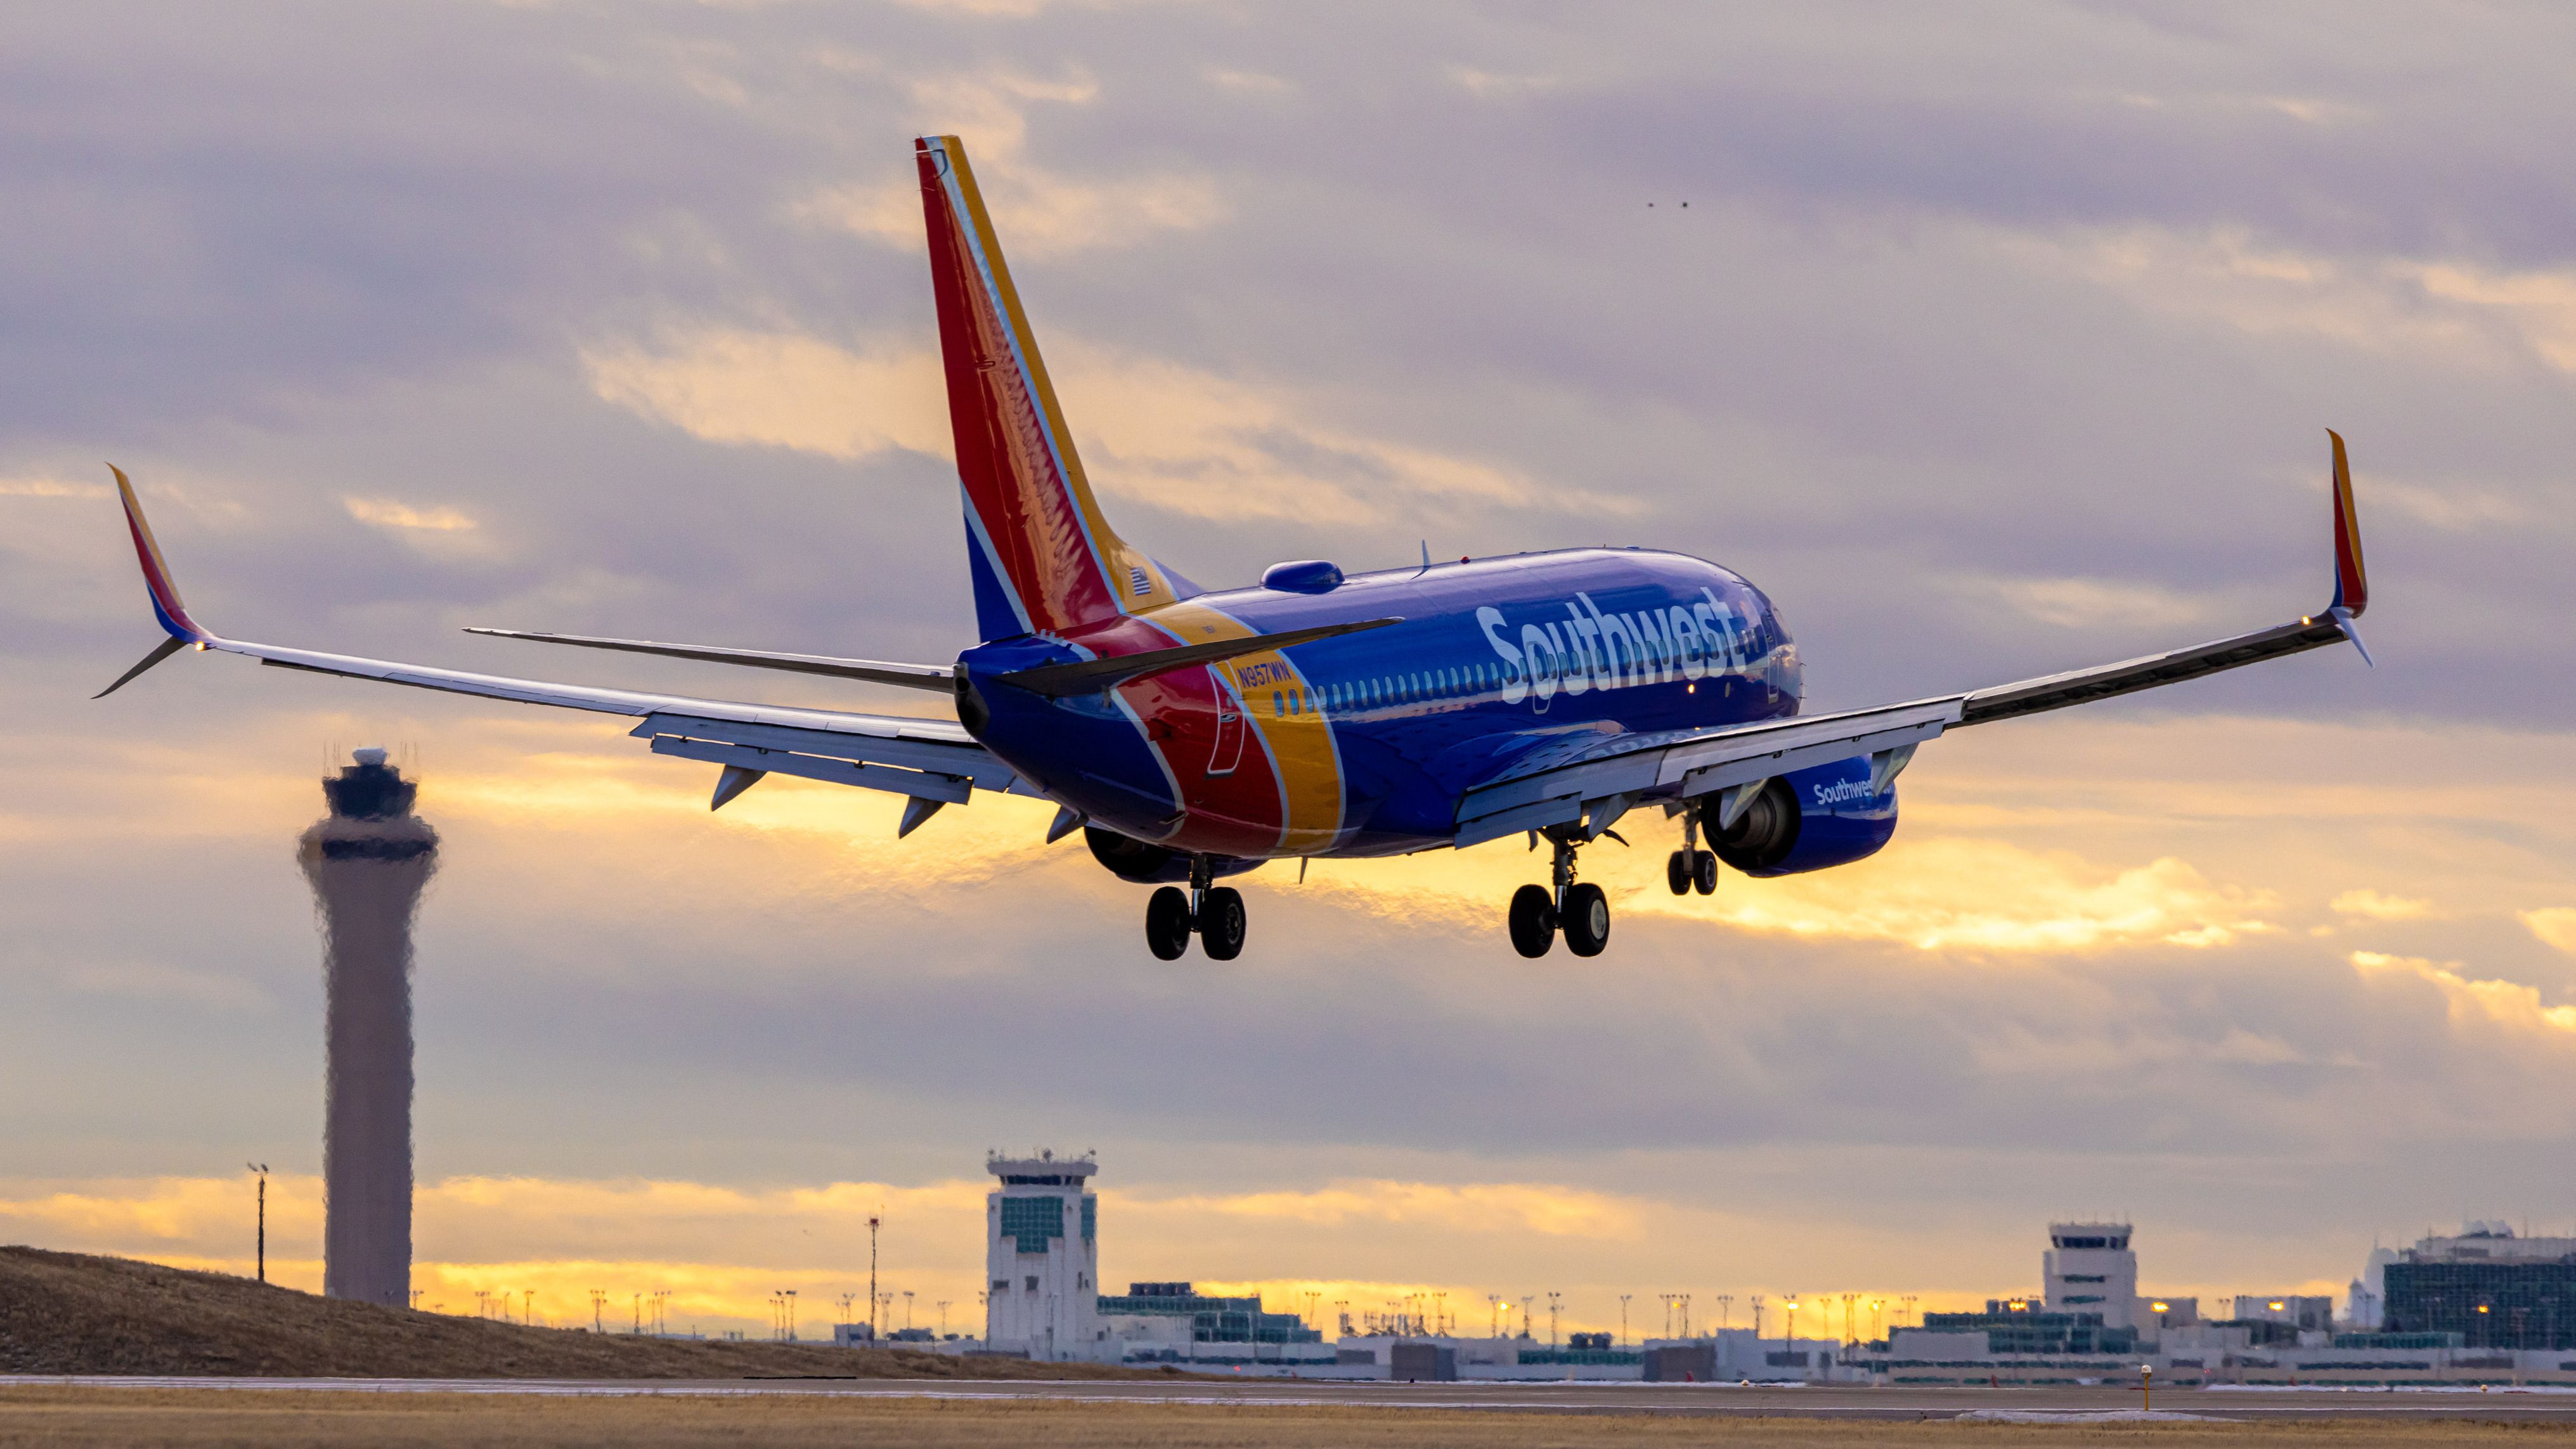 A Southwest Airlines plane landing at Denver International Airport